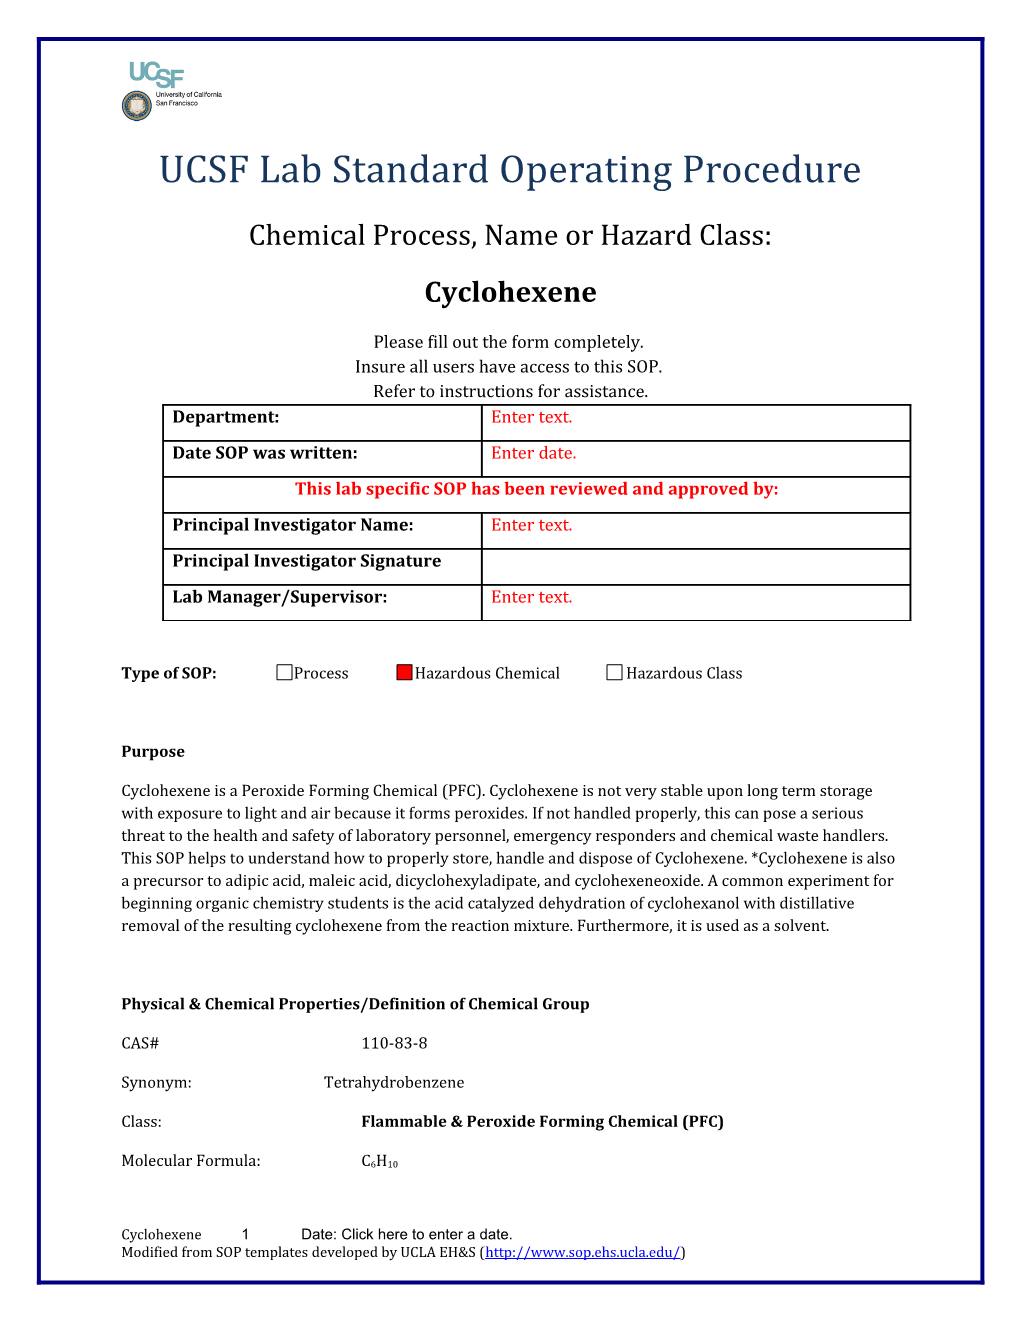 UCSF Lab Standard Operating Procedure s1